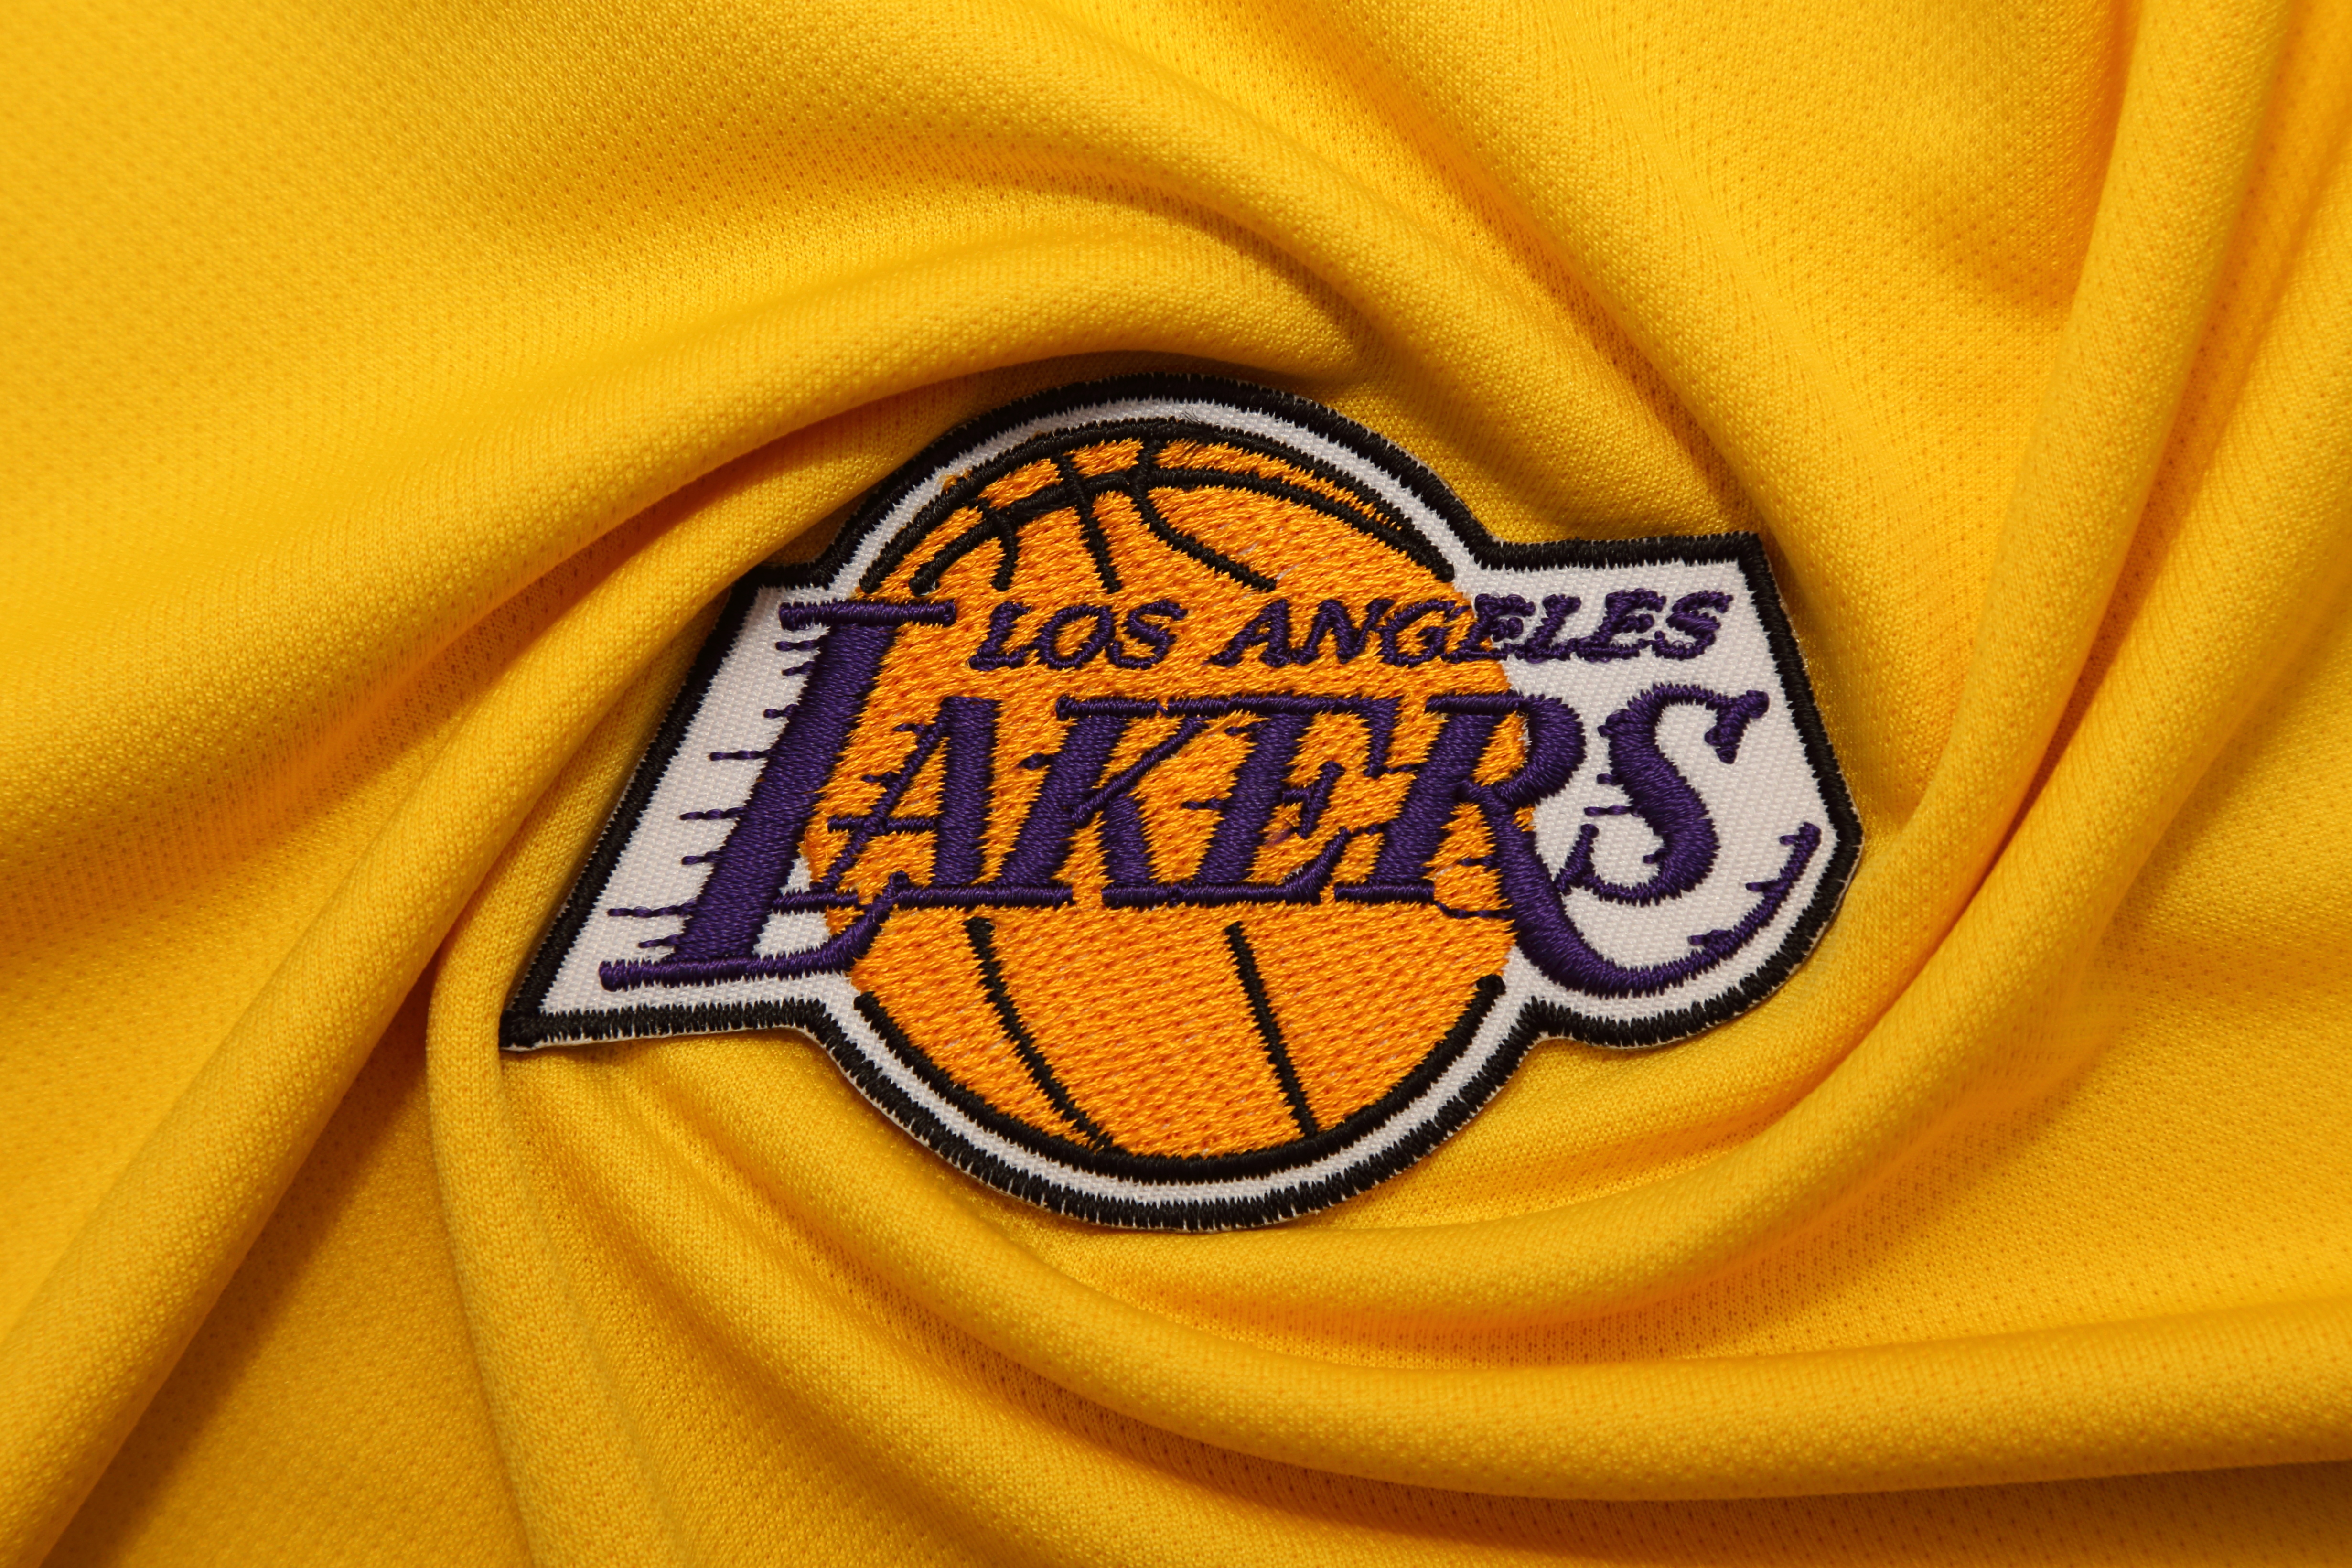 Download Los Angeles Lakers Kobe Bryant Jersey Wallpaper